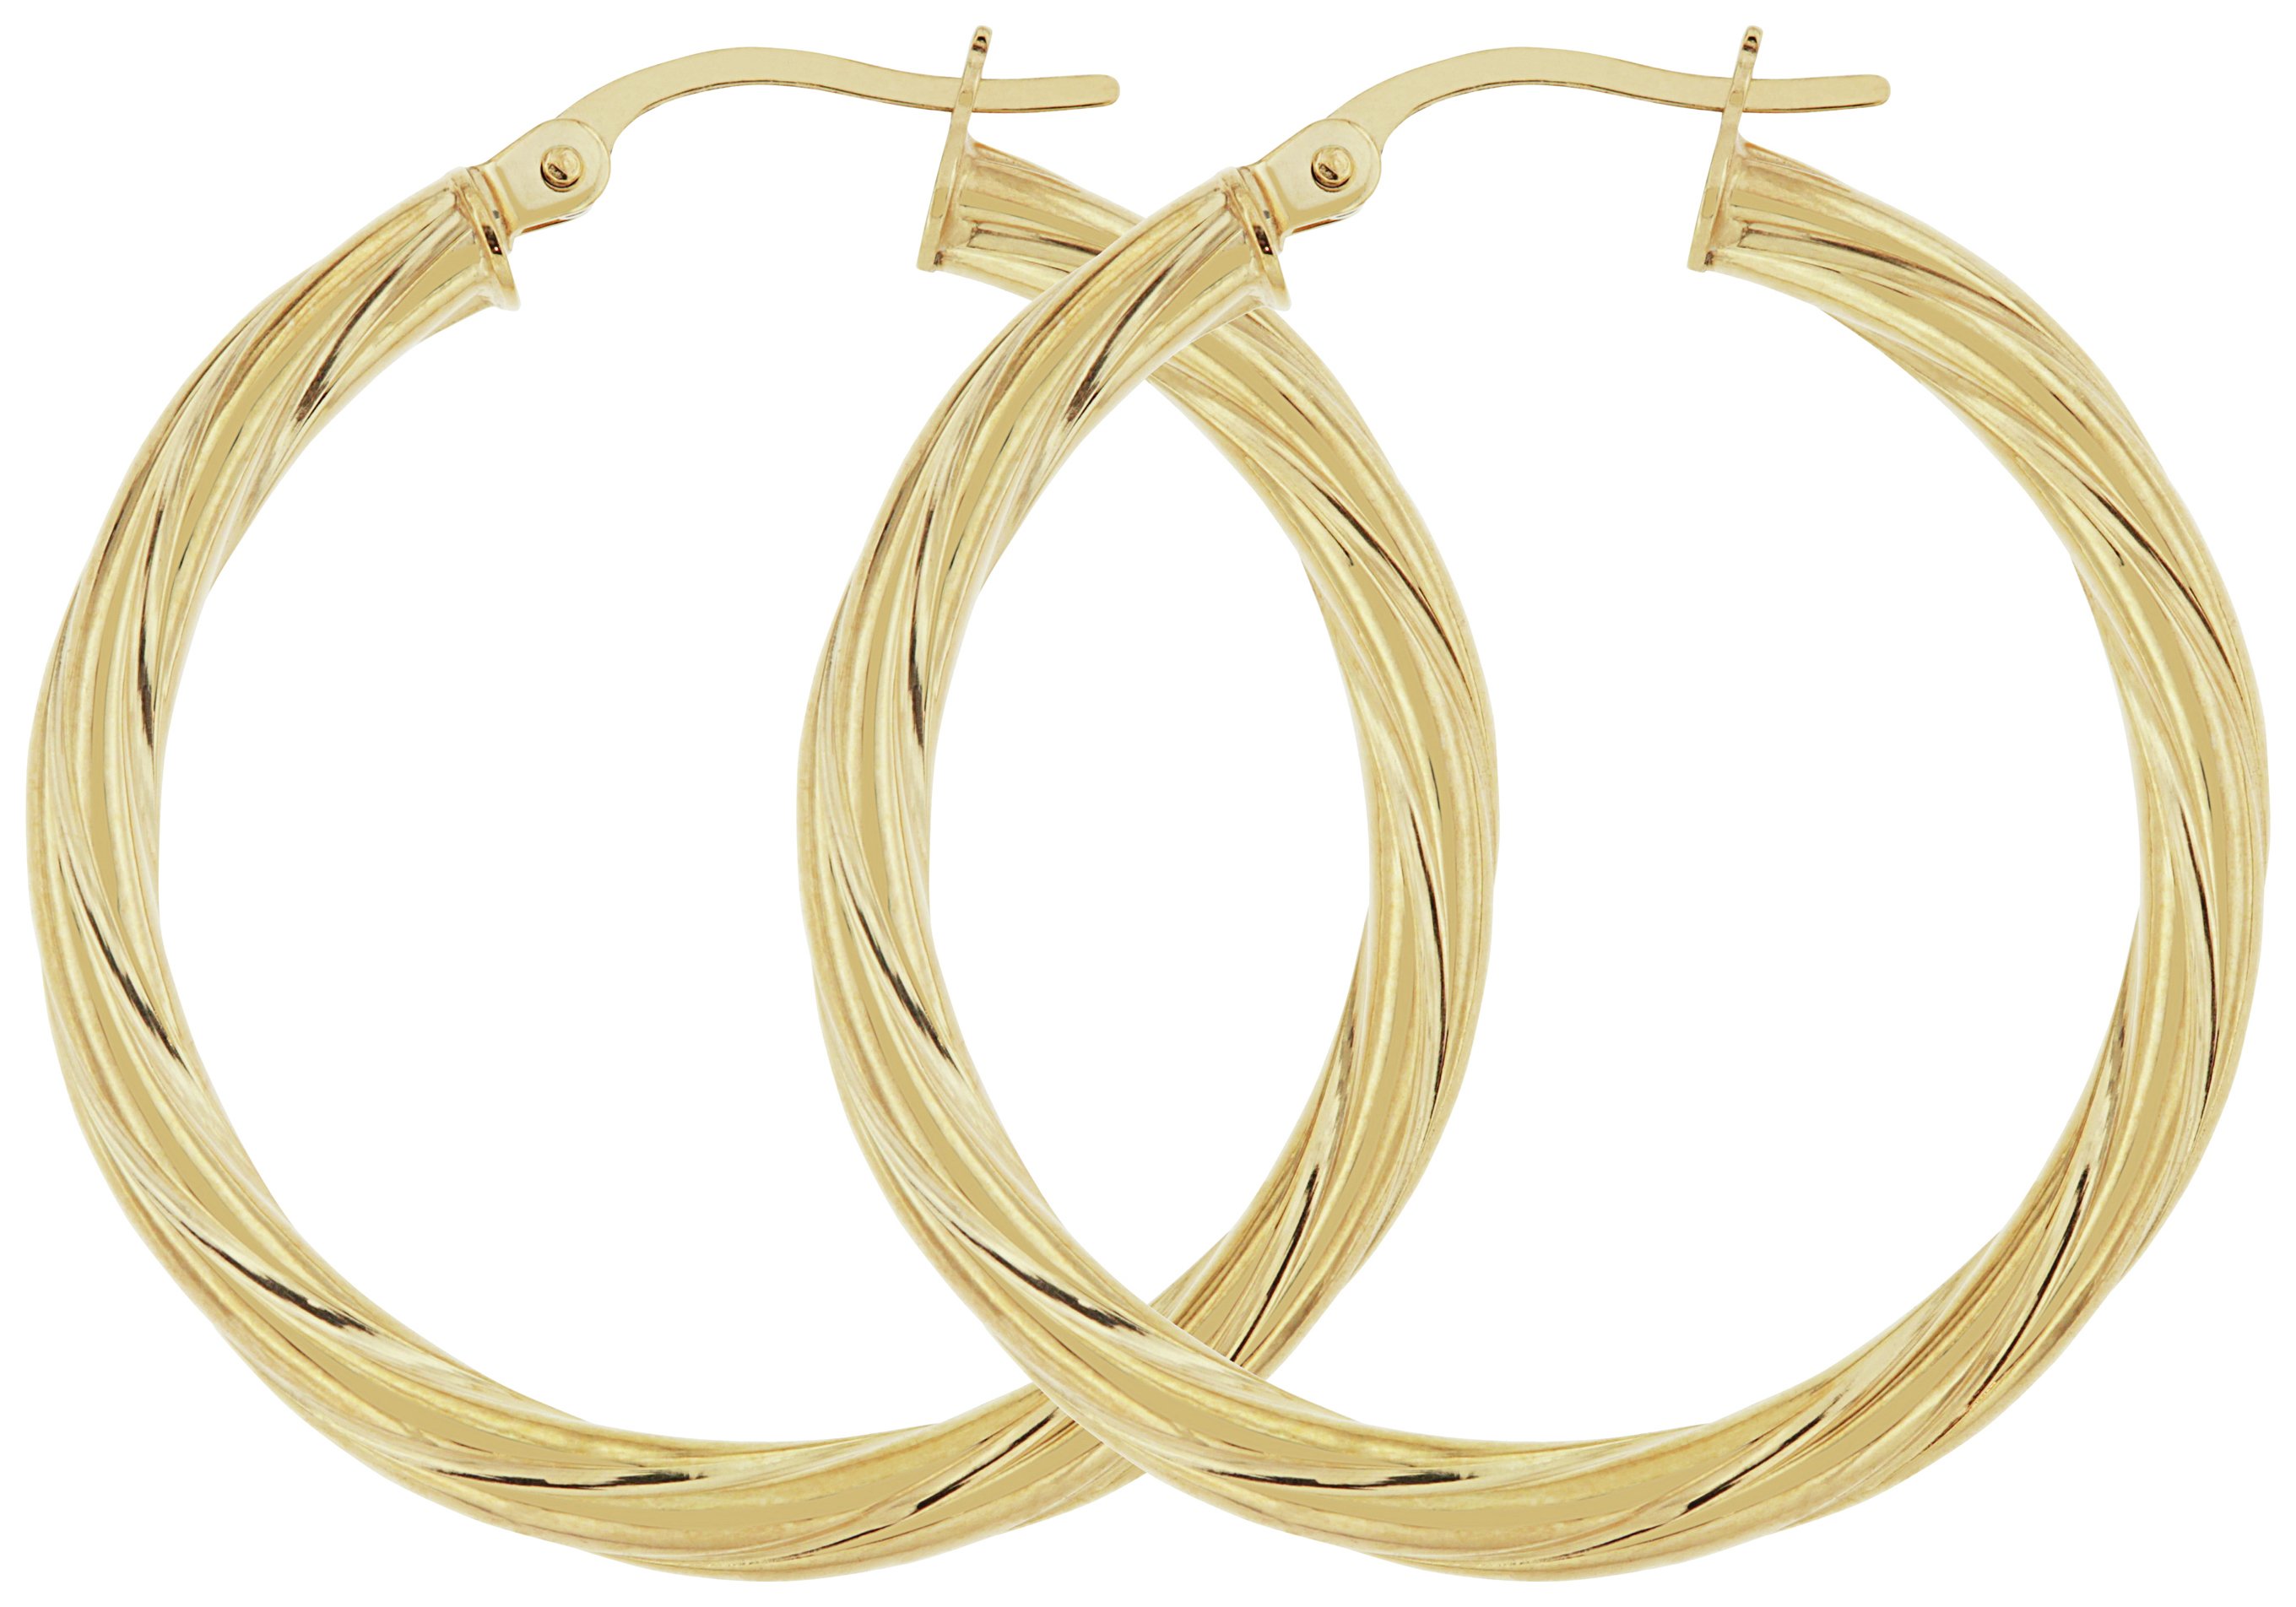 EAN 5055860300079 product image for Bracci 9ct Gold 30mm Twist Hoop Earrings | upcitemdb.com